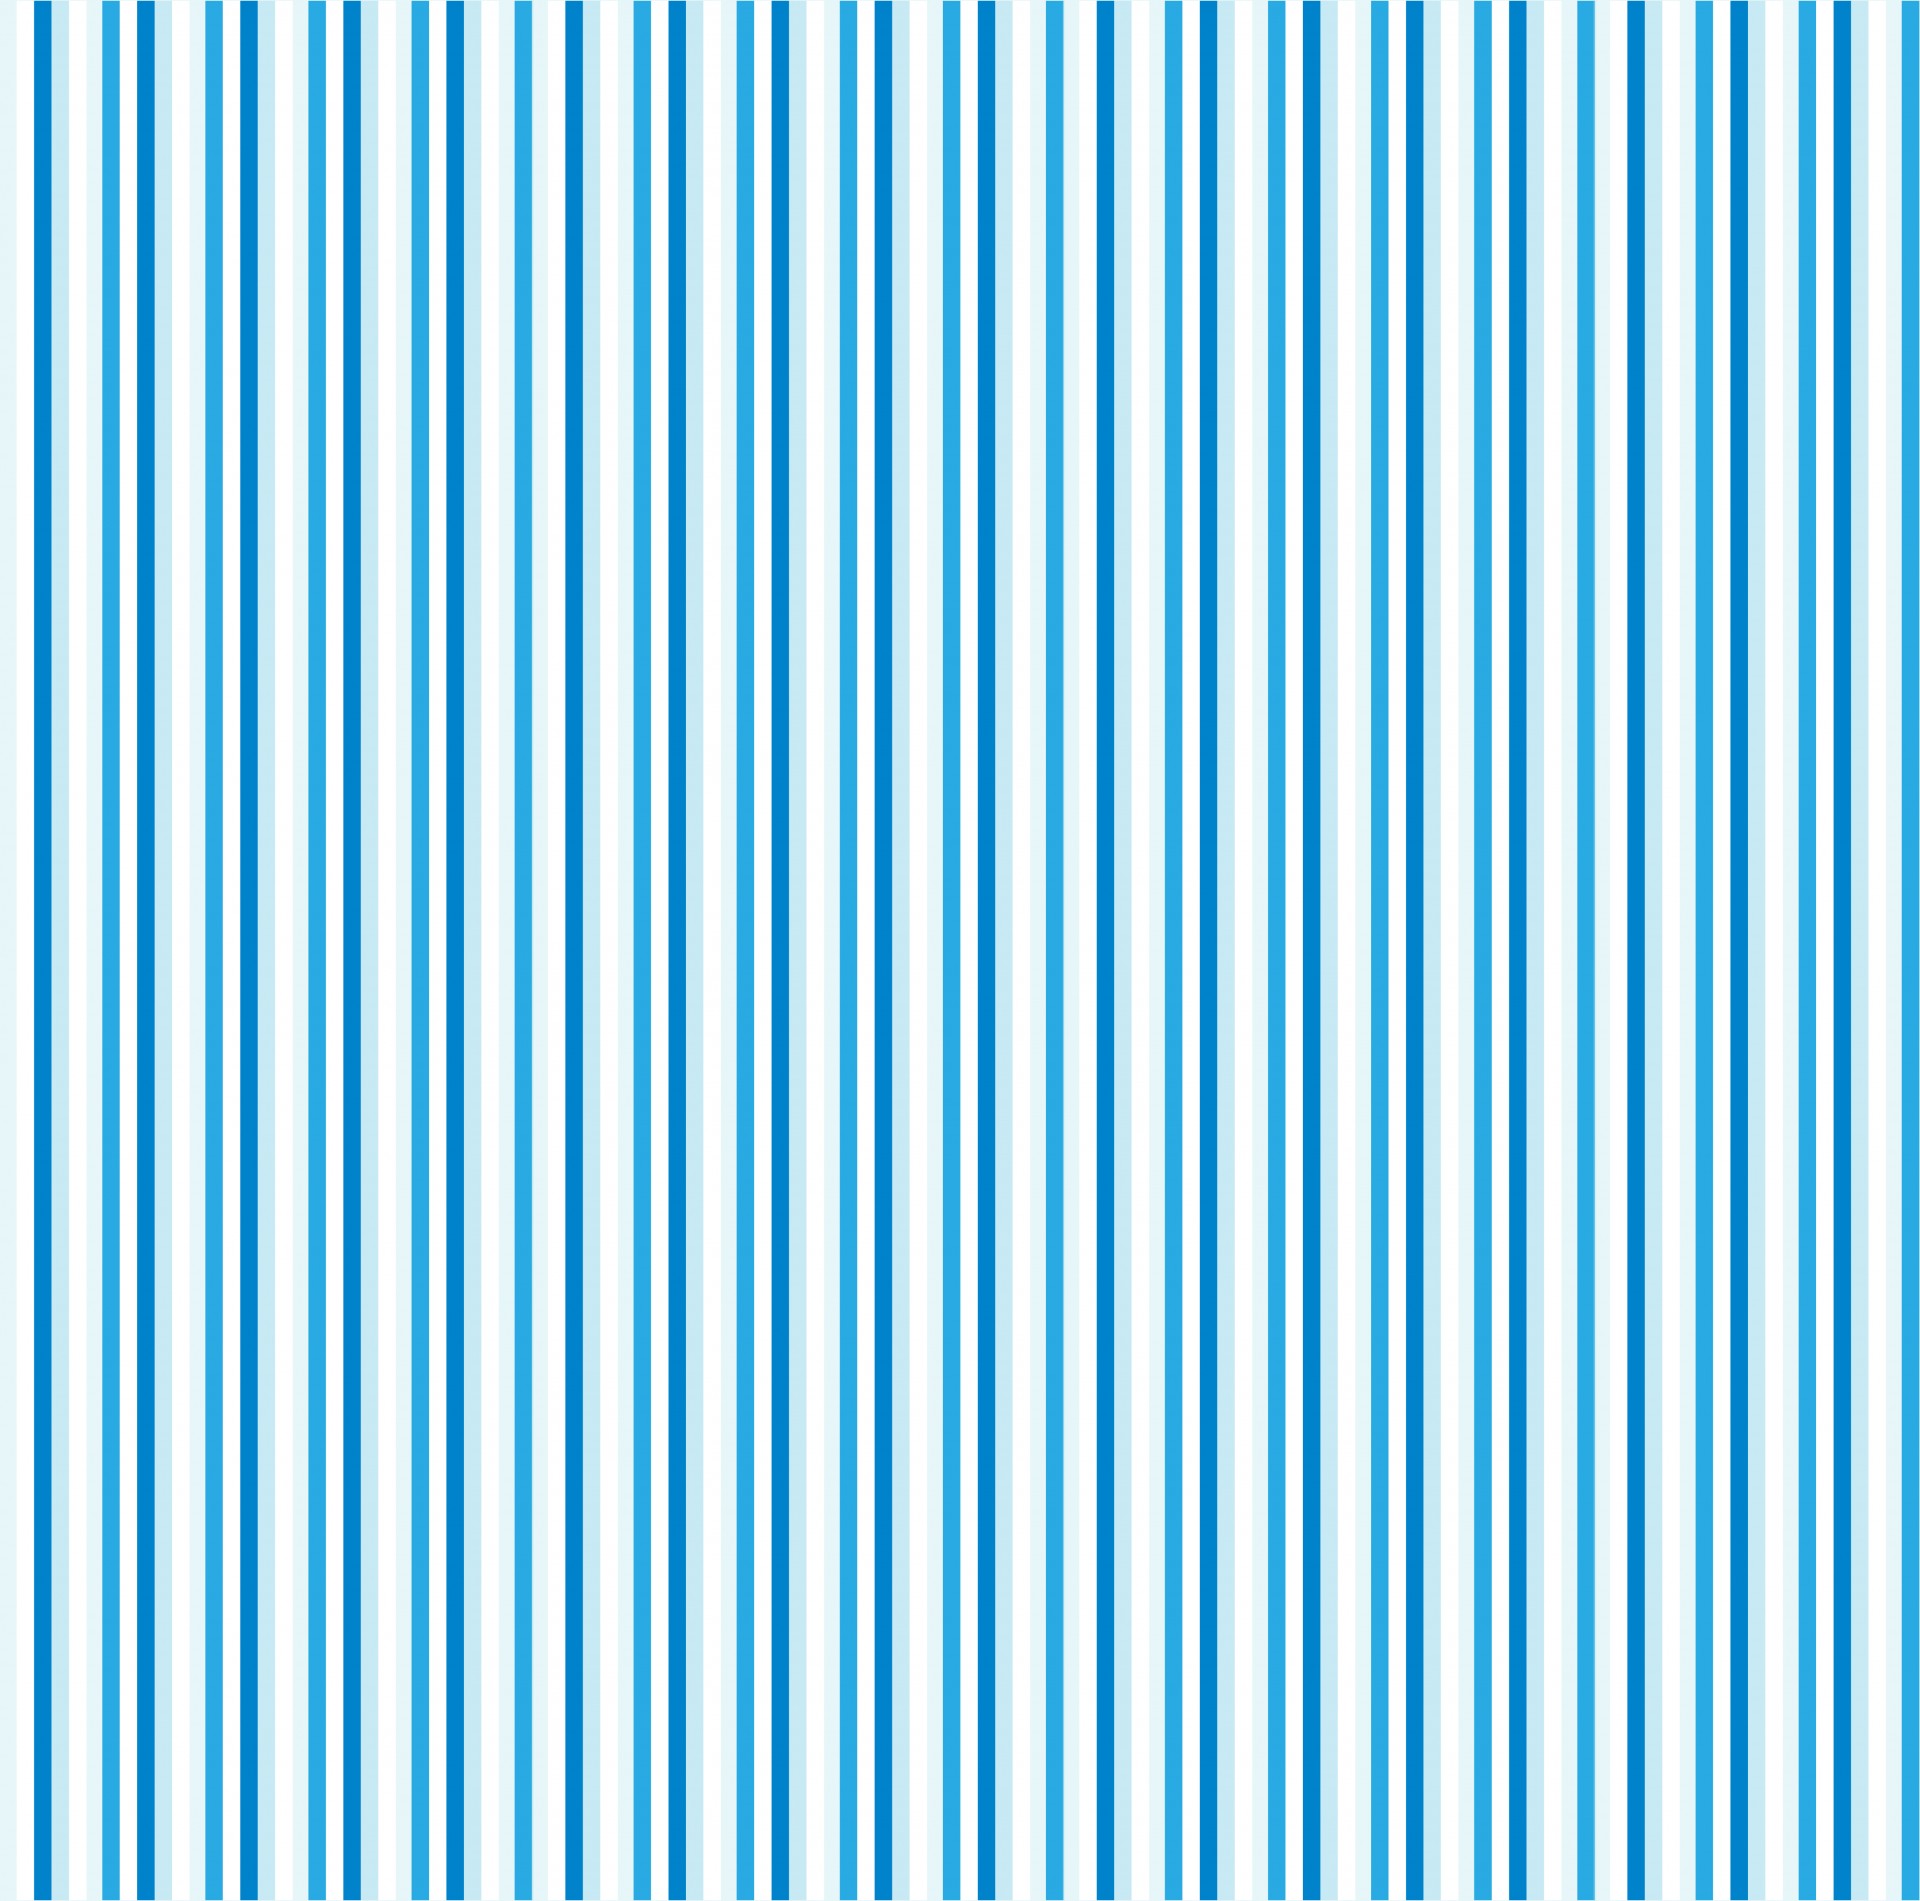 stripes striped blue free photo